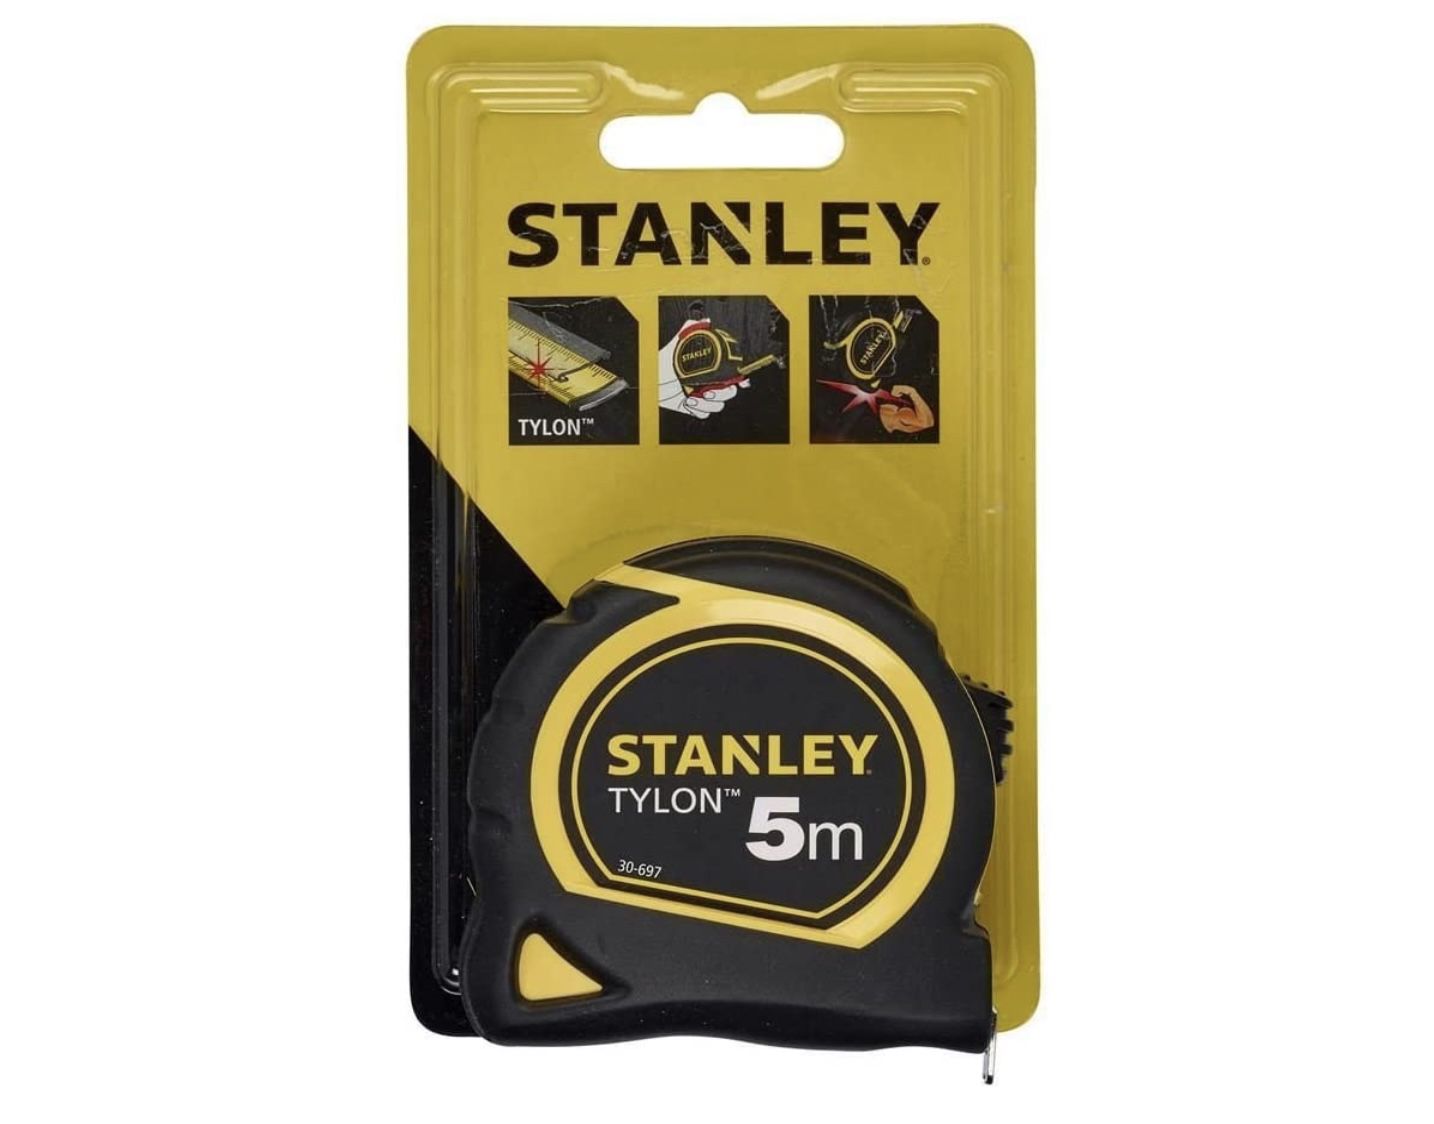 Stanley 5m Bandmaß Tylon für 6,28€ (statt 11€)